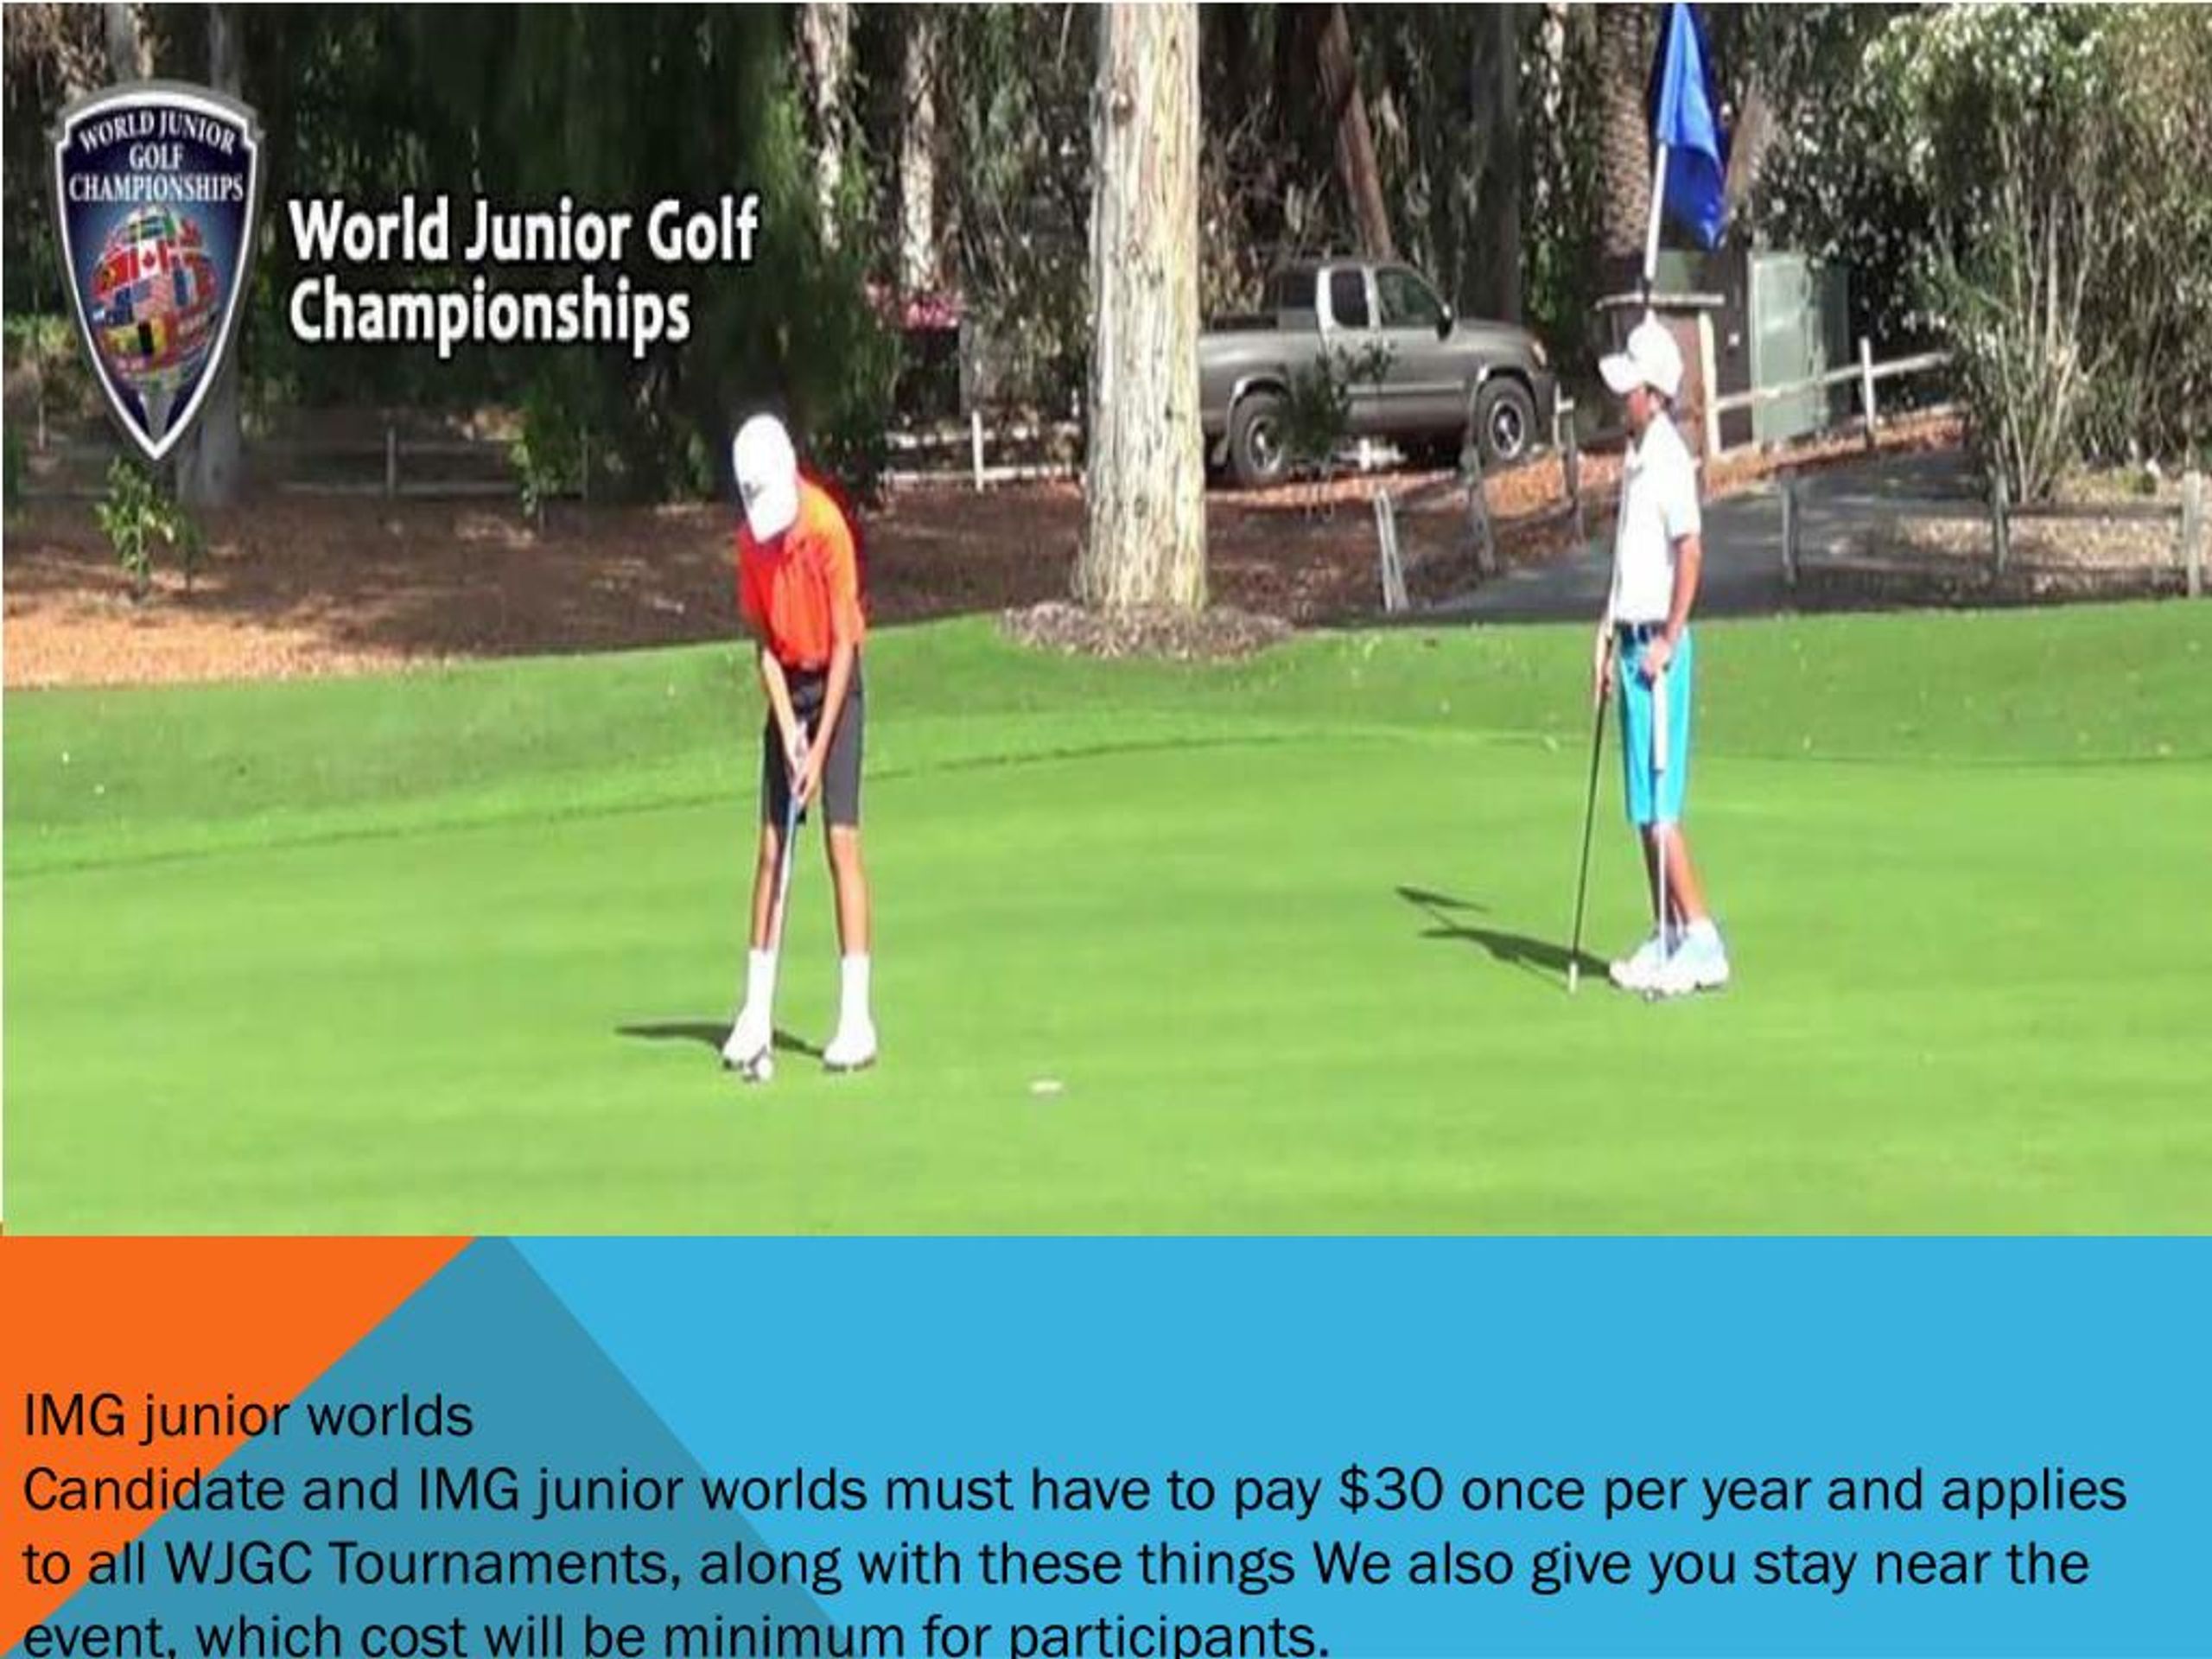 PPT World Junior Golf Championships PowerPoint Presentation, free